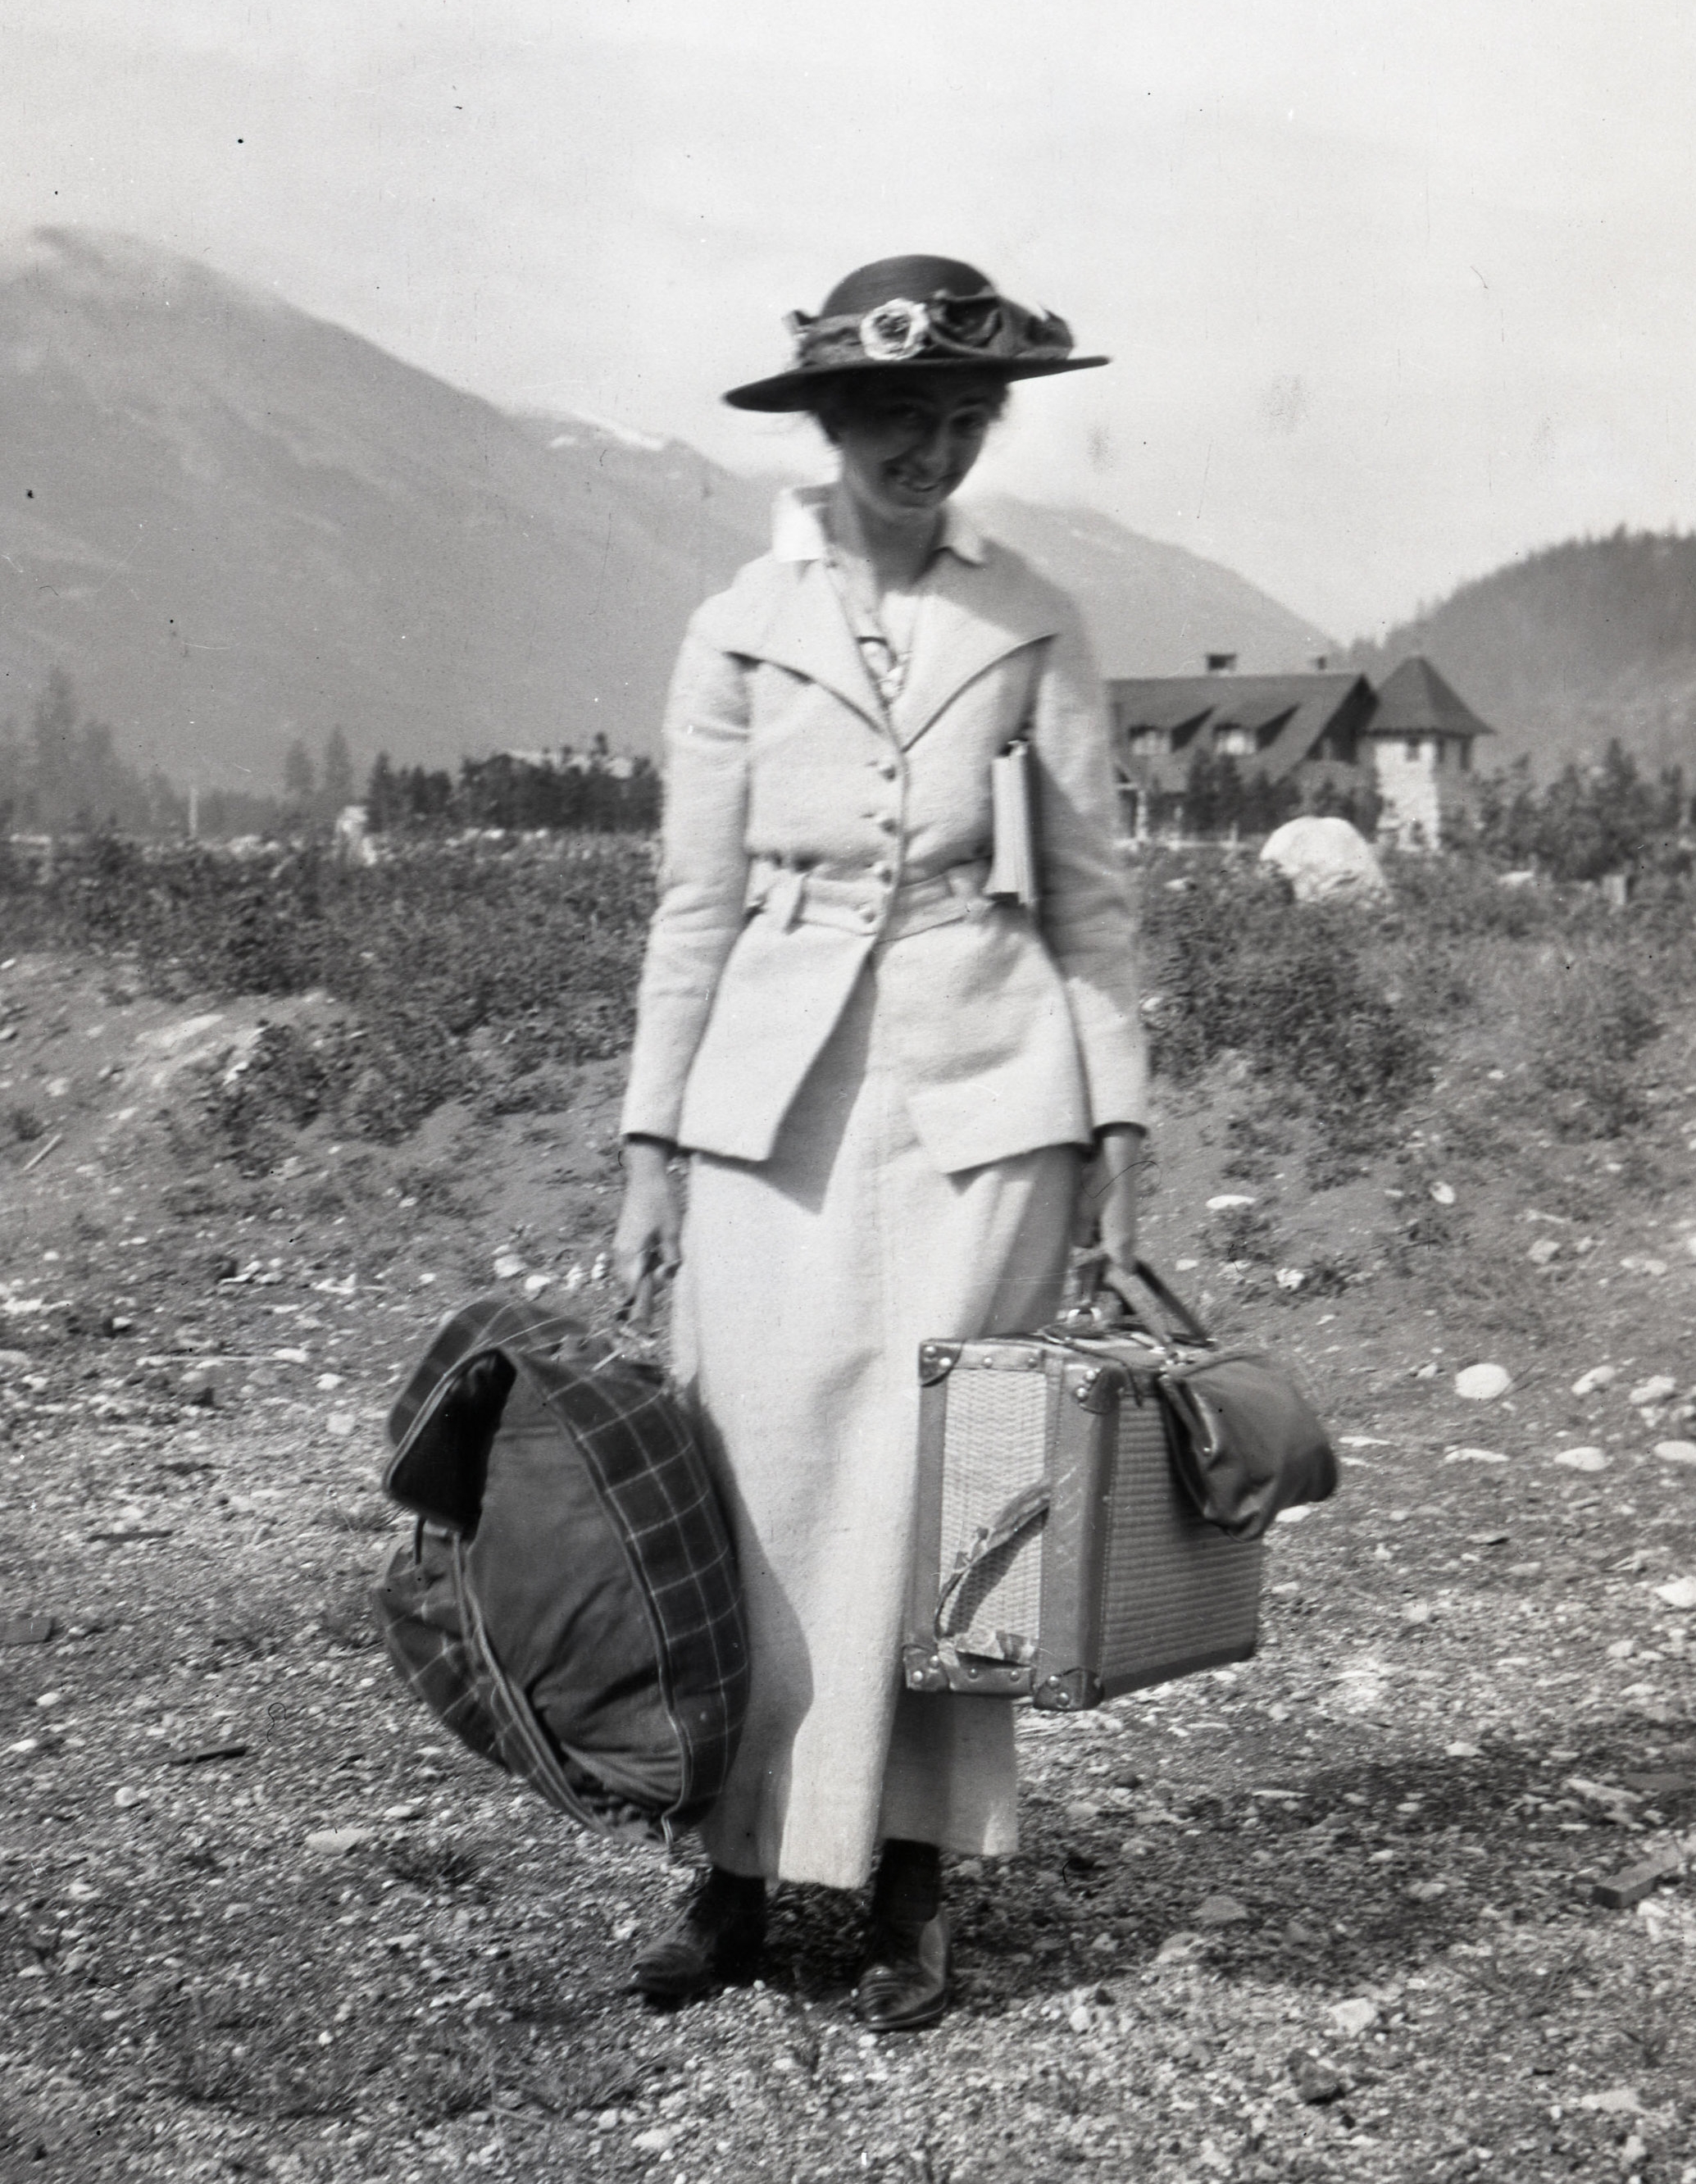  Miss Candace Hewitt arrives in Jasper to climb Resplendent Mountain. 